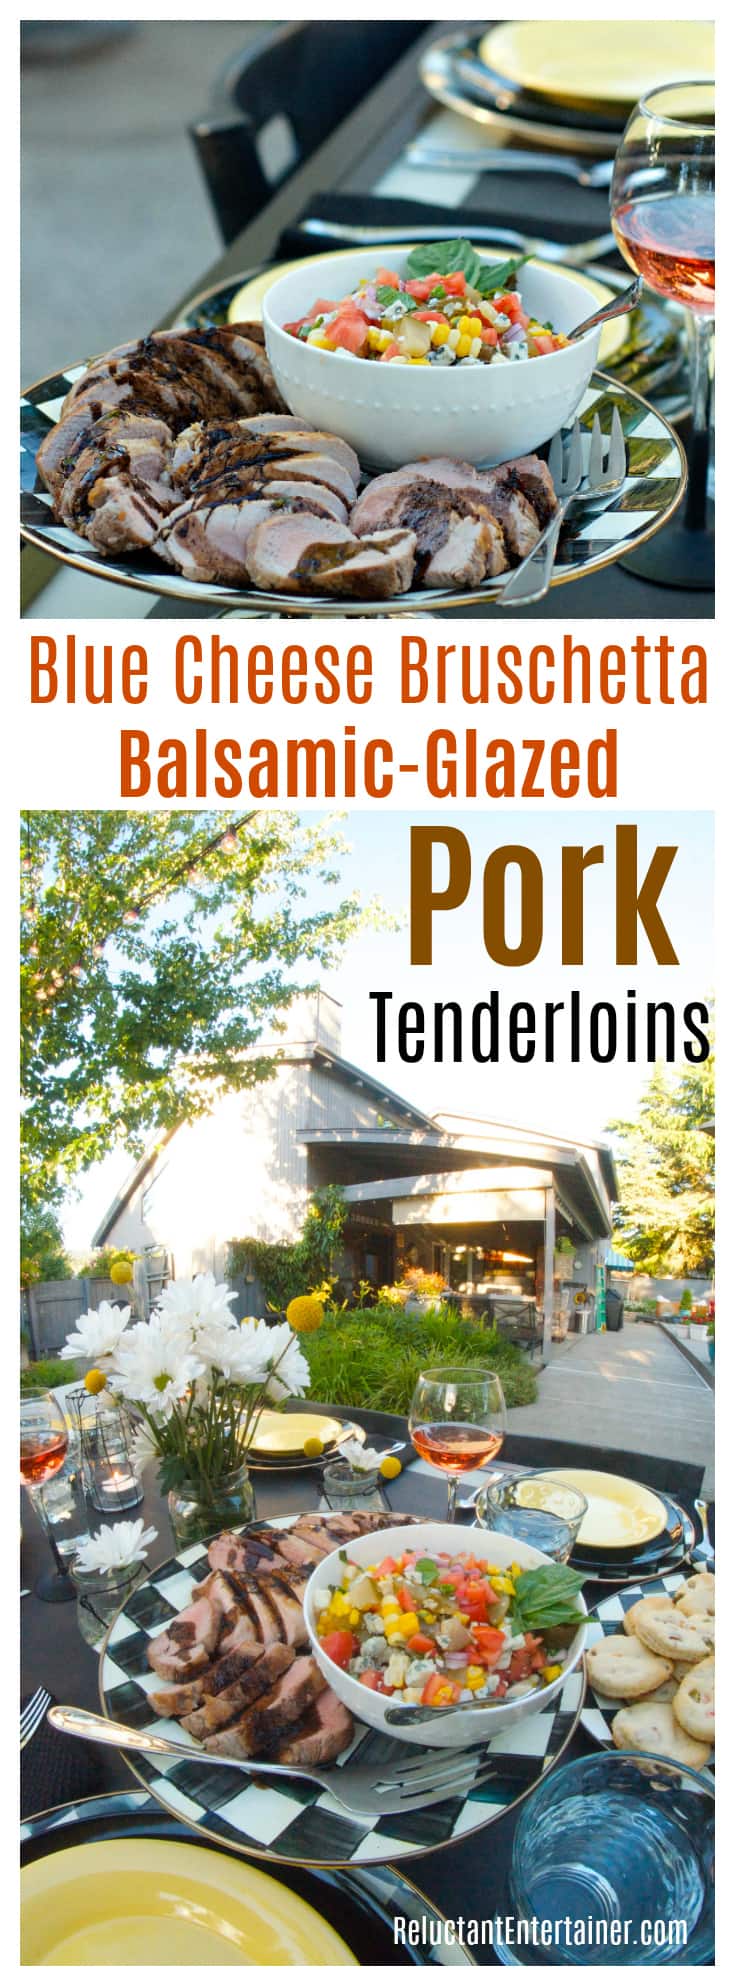 Blue Cheese Bruschetta Balsamic-Glazed Pork Tenderloins